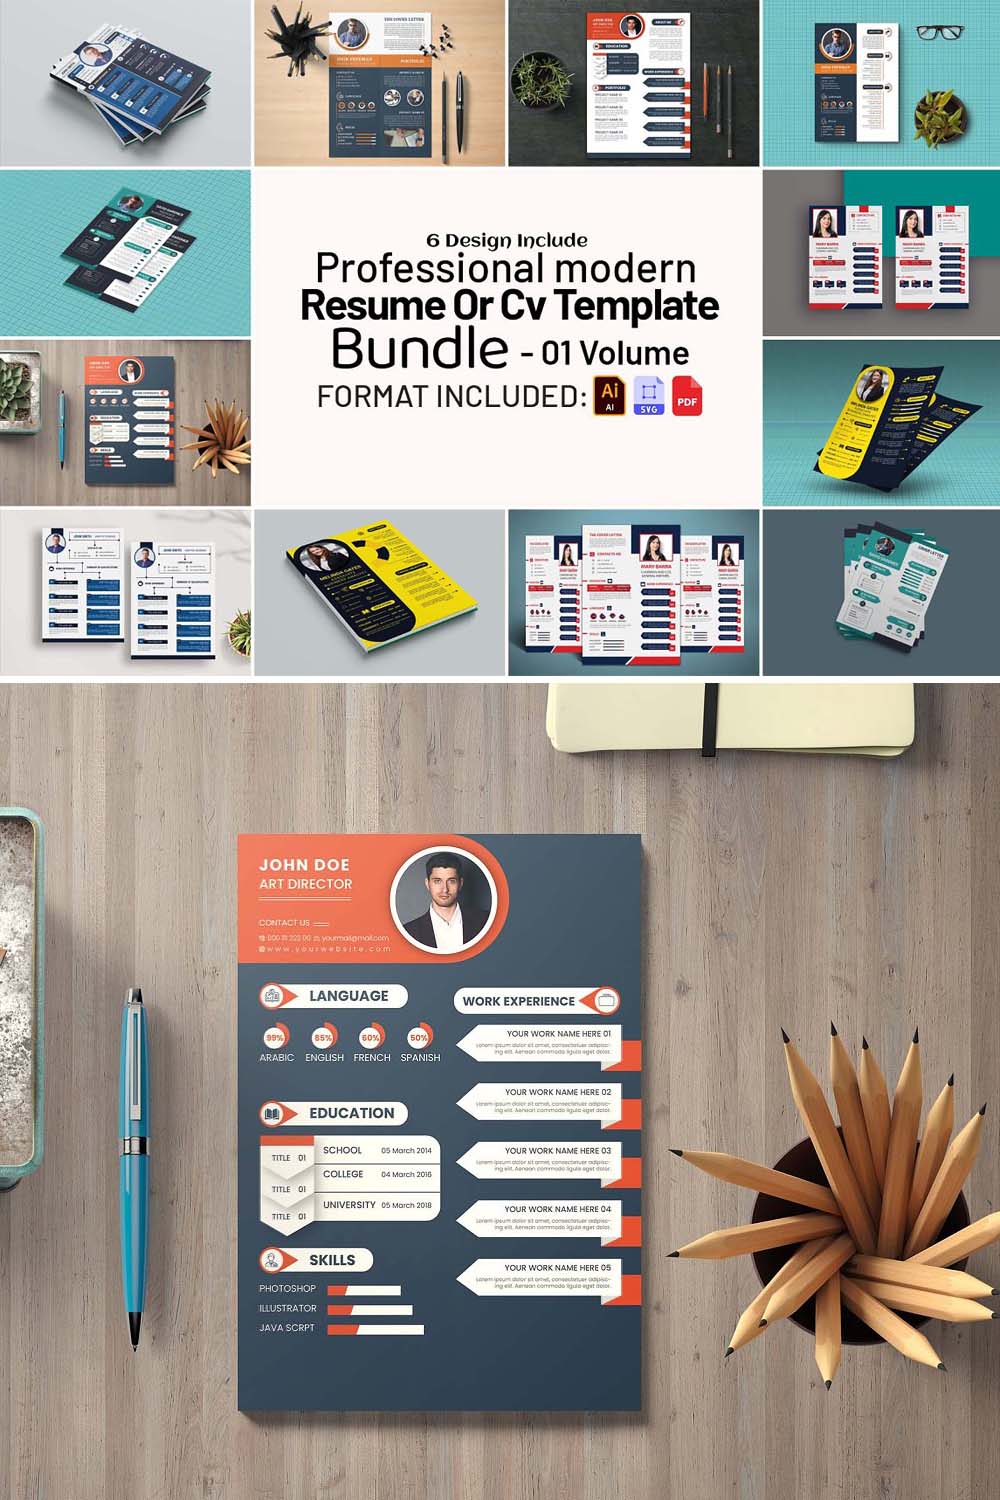 Creative CV Resume Design pinterest preview image.